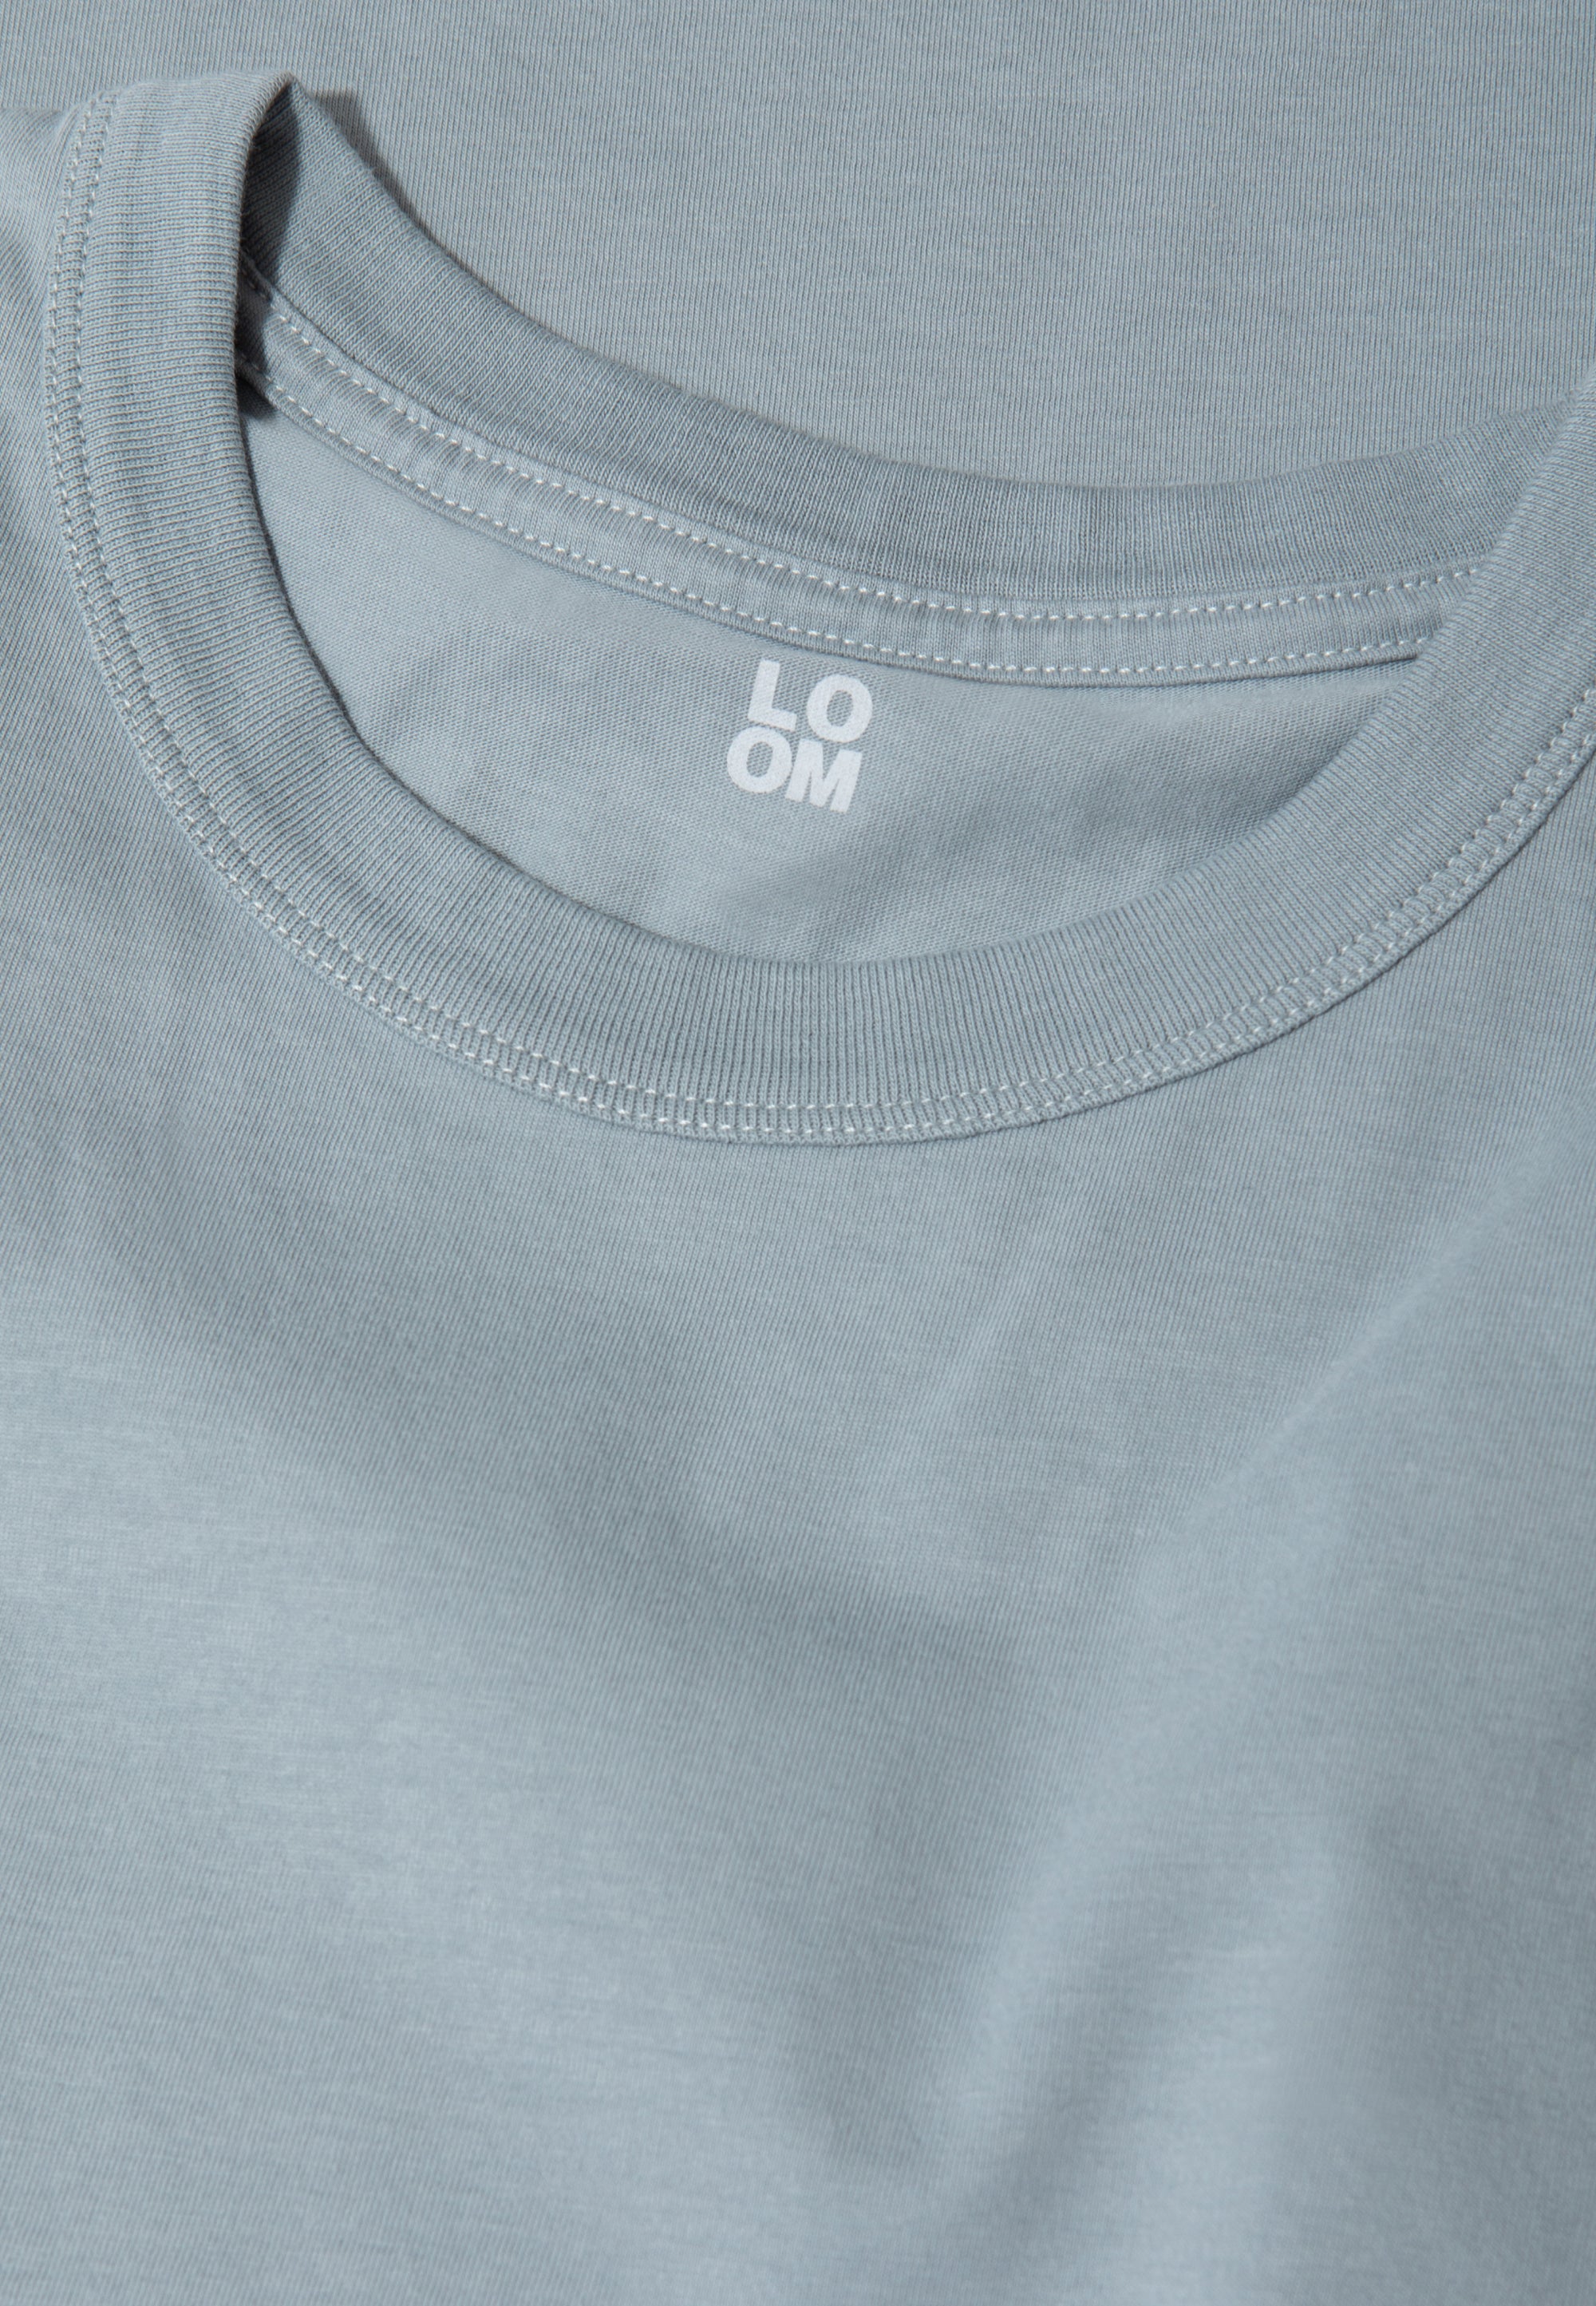 t-shirt coton bio loom Bleu pâle détail col